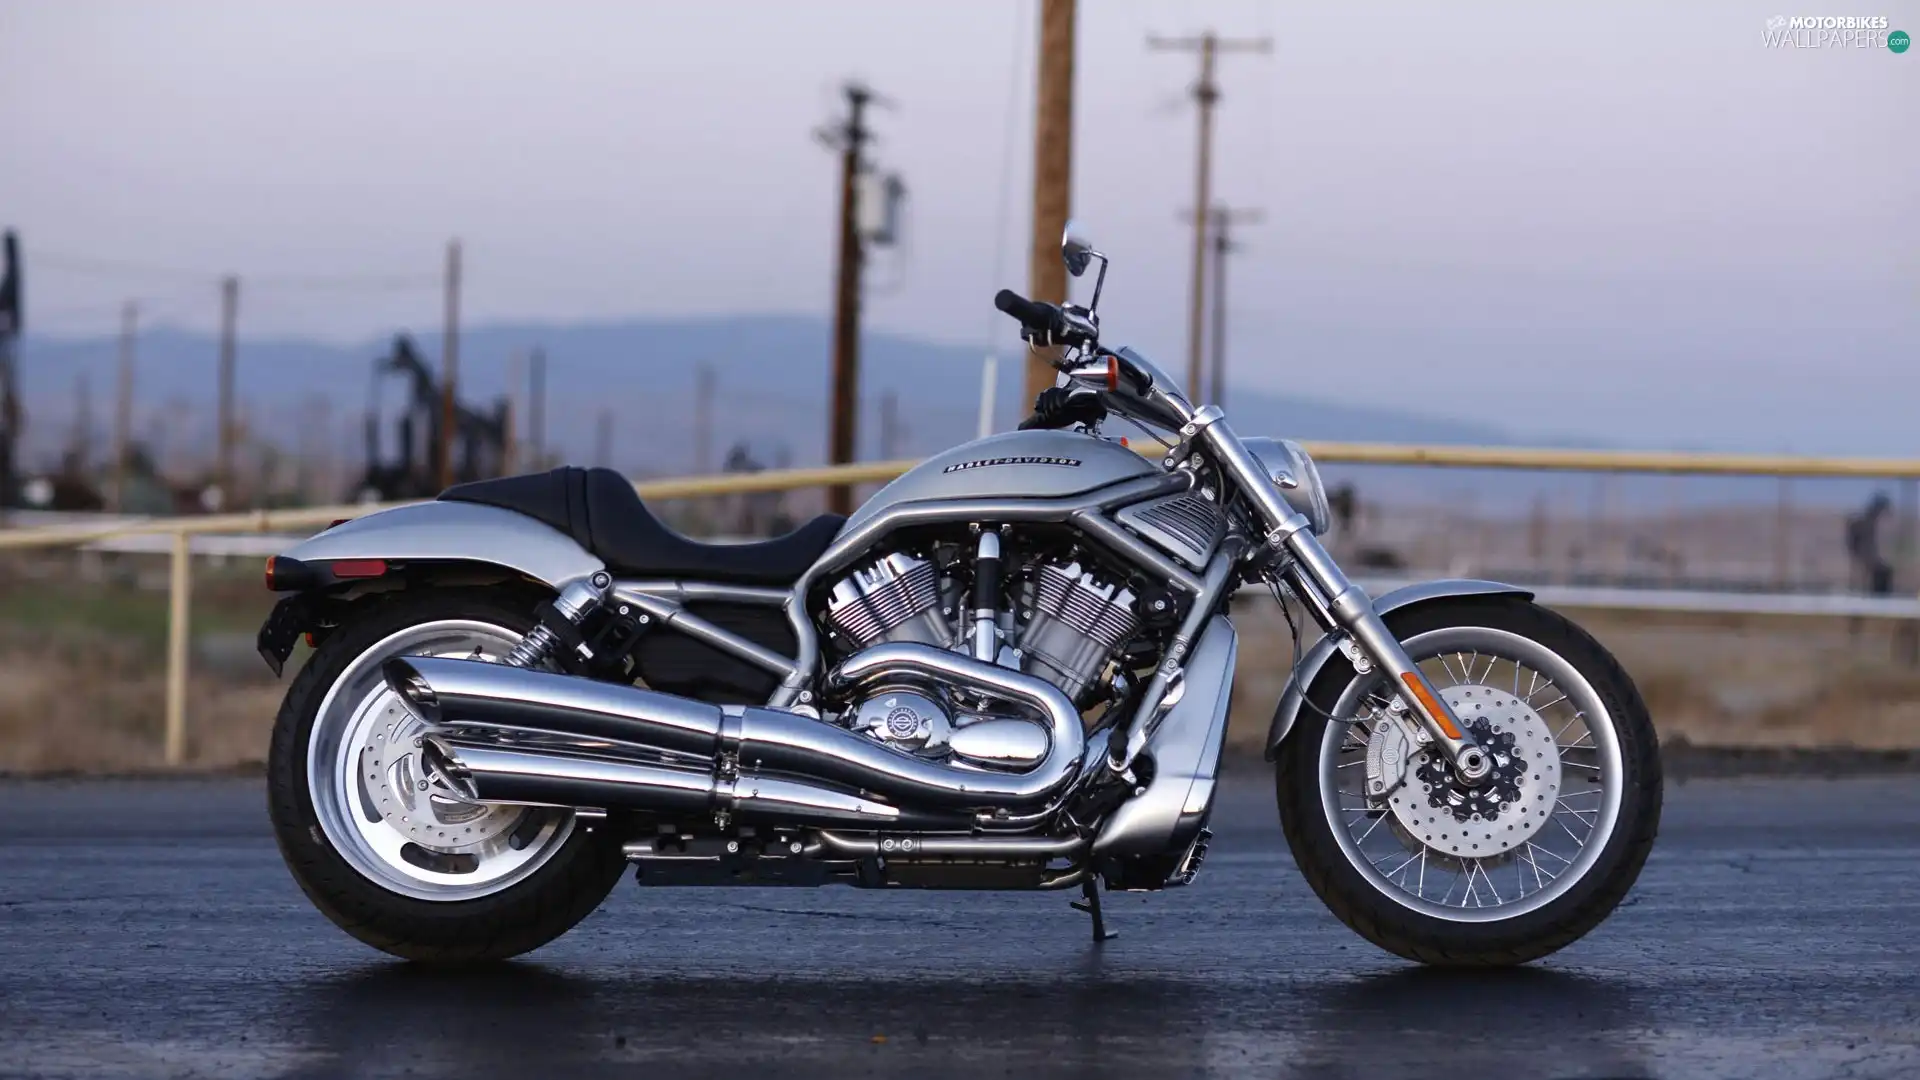 silver, Harley Davidson V-Rod